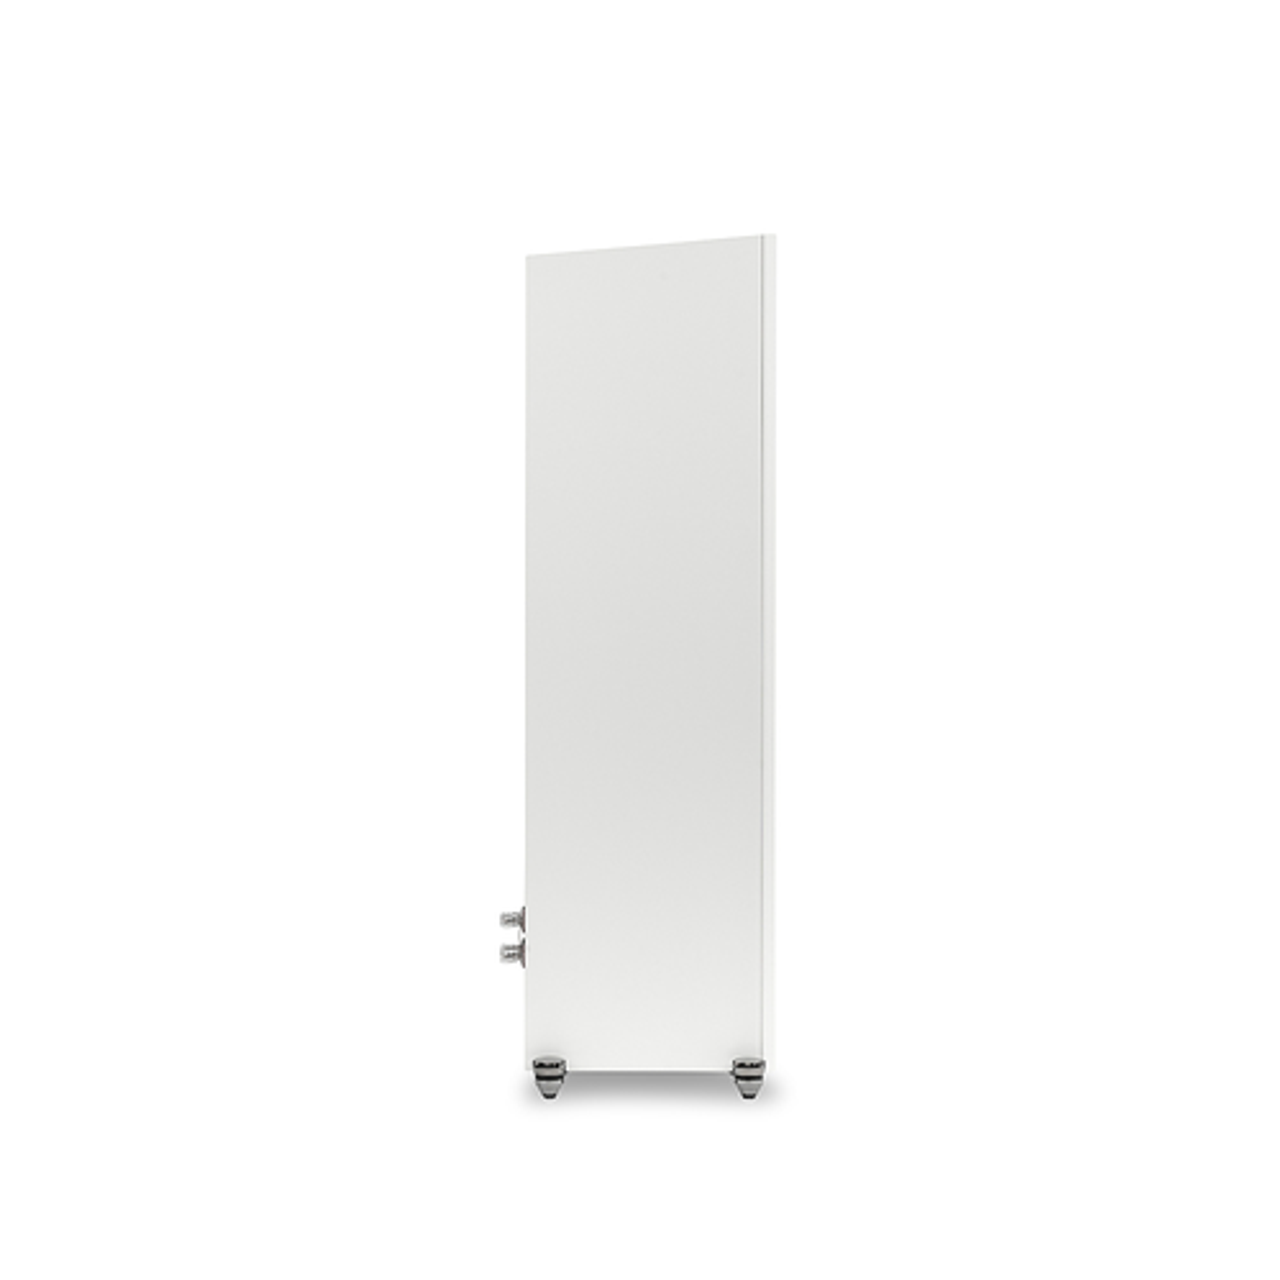 MartinLogan - Motion Series 3-Way Tower Speaker, Gen2 Folded Motion Tweeter, 5.5” Midrange, Dual 6.5” Bass Drivers (Each) - Satin White